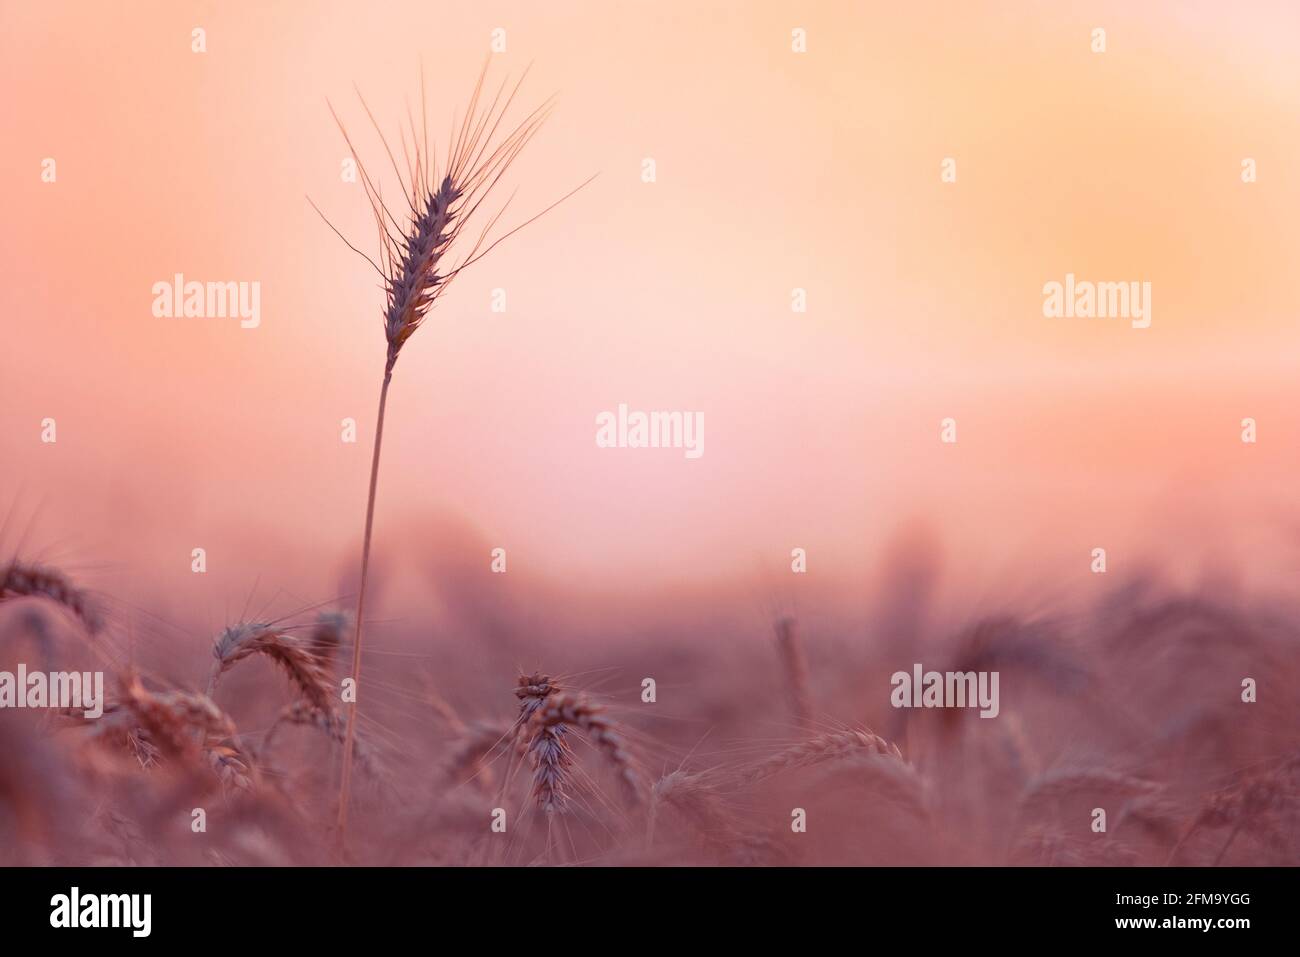 Wheat field. Ears of wheat close up. Beautiful Nature Sunset Landscape. Rural Scenery Stock Photo